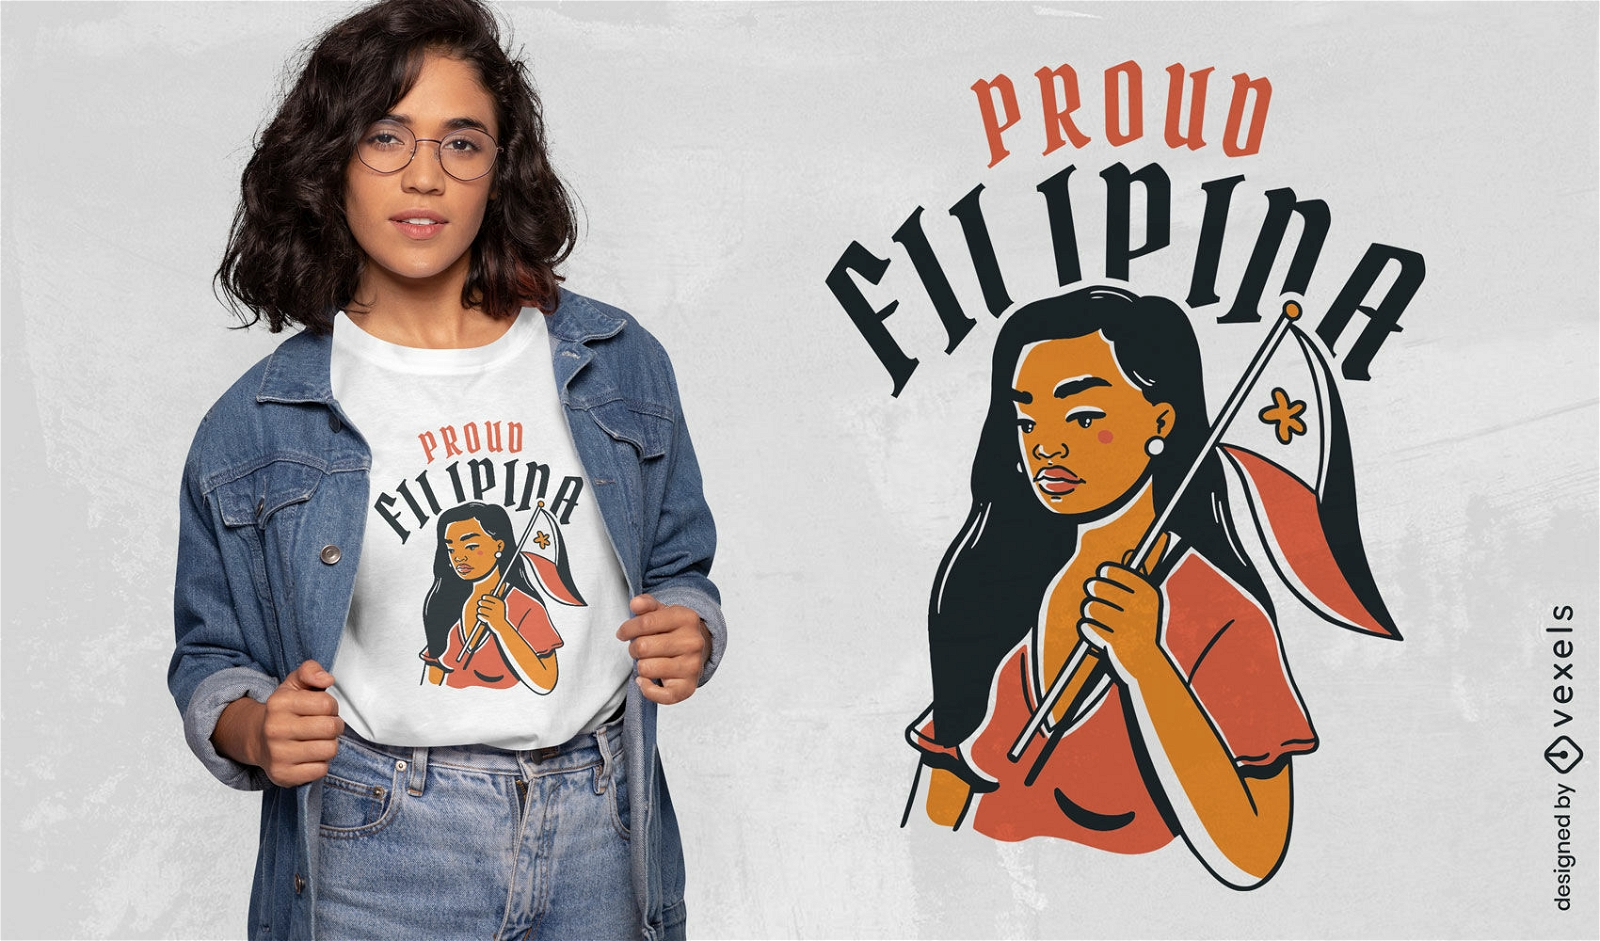 Proud filipino woman t-shirt design